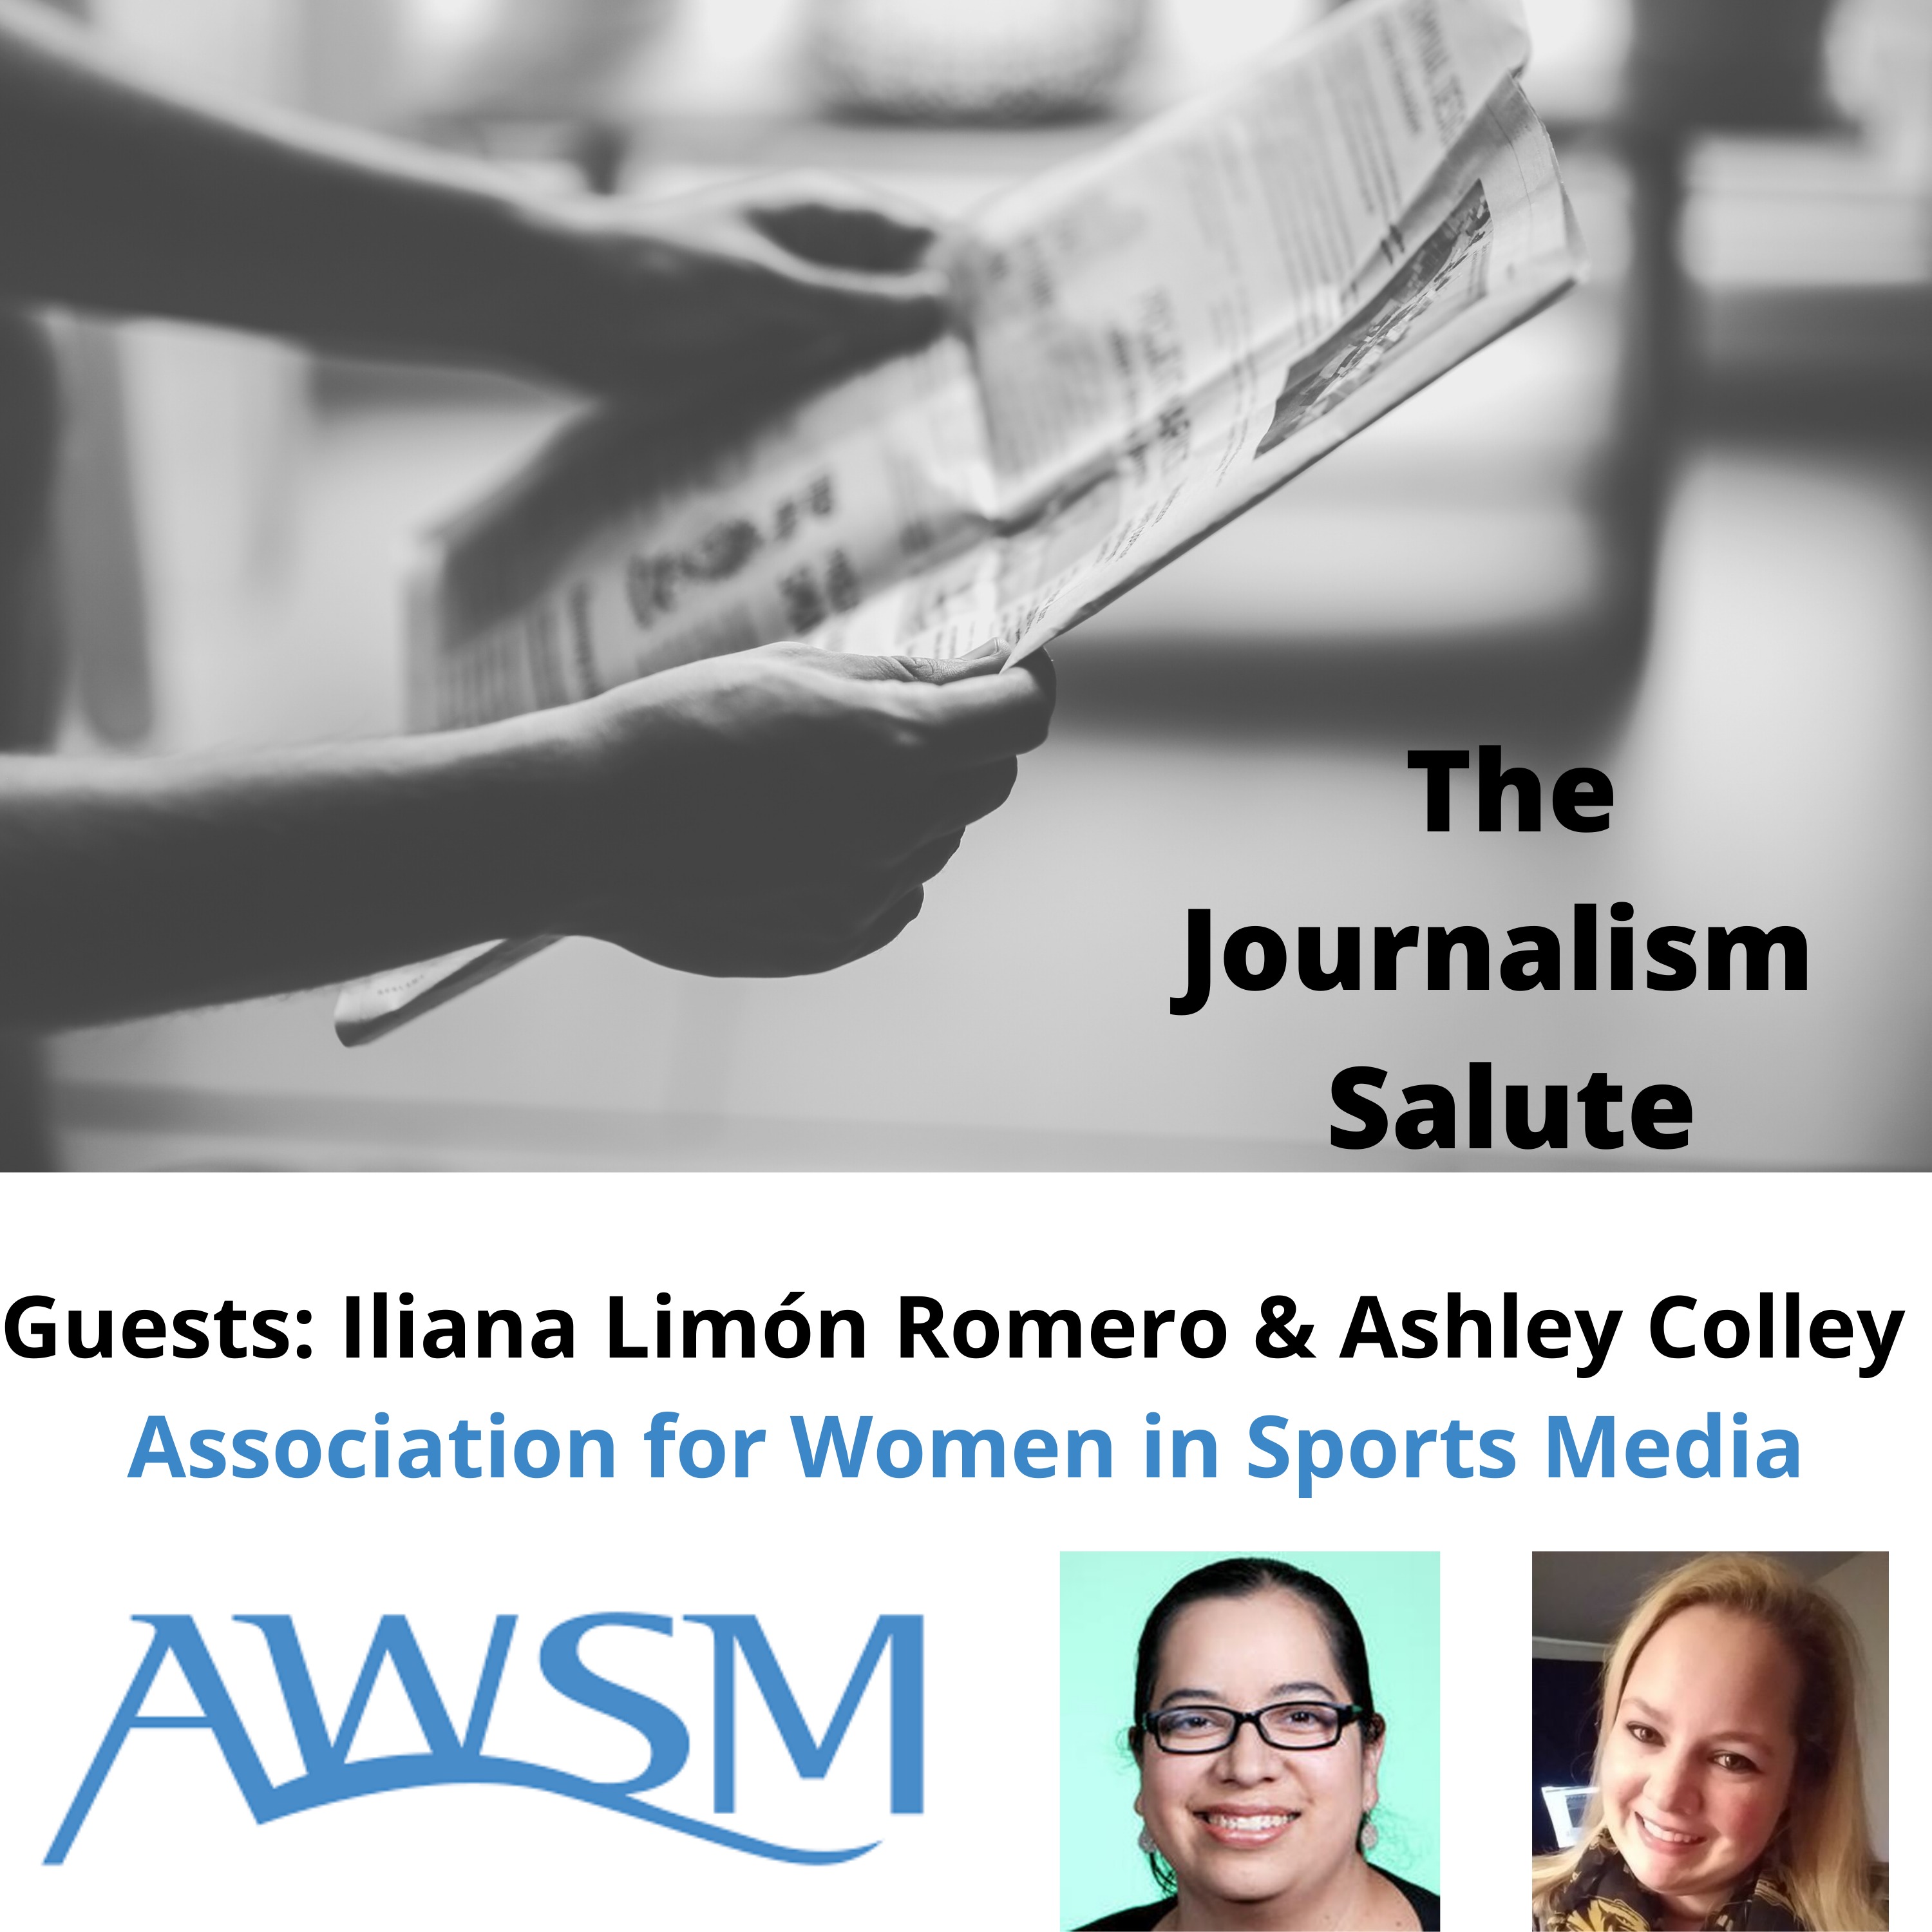 Iliana Limón Romero & Ashley Colley of The Association for Women in Sports Media